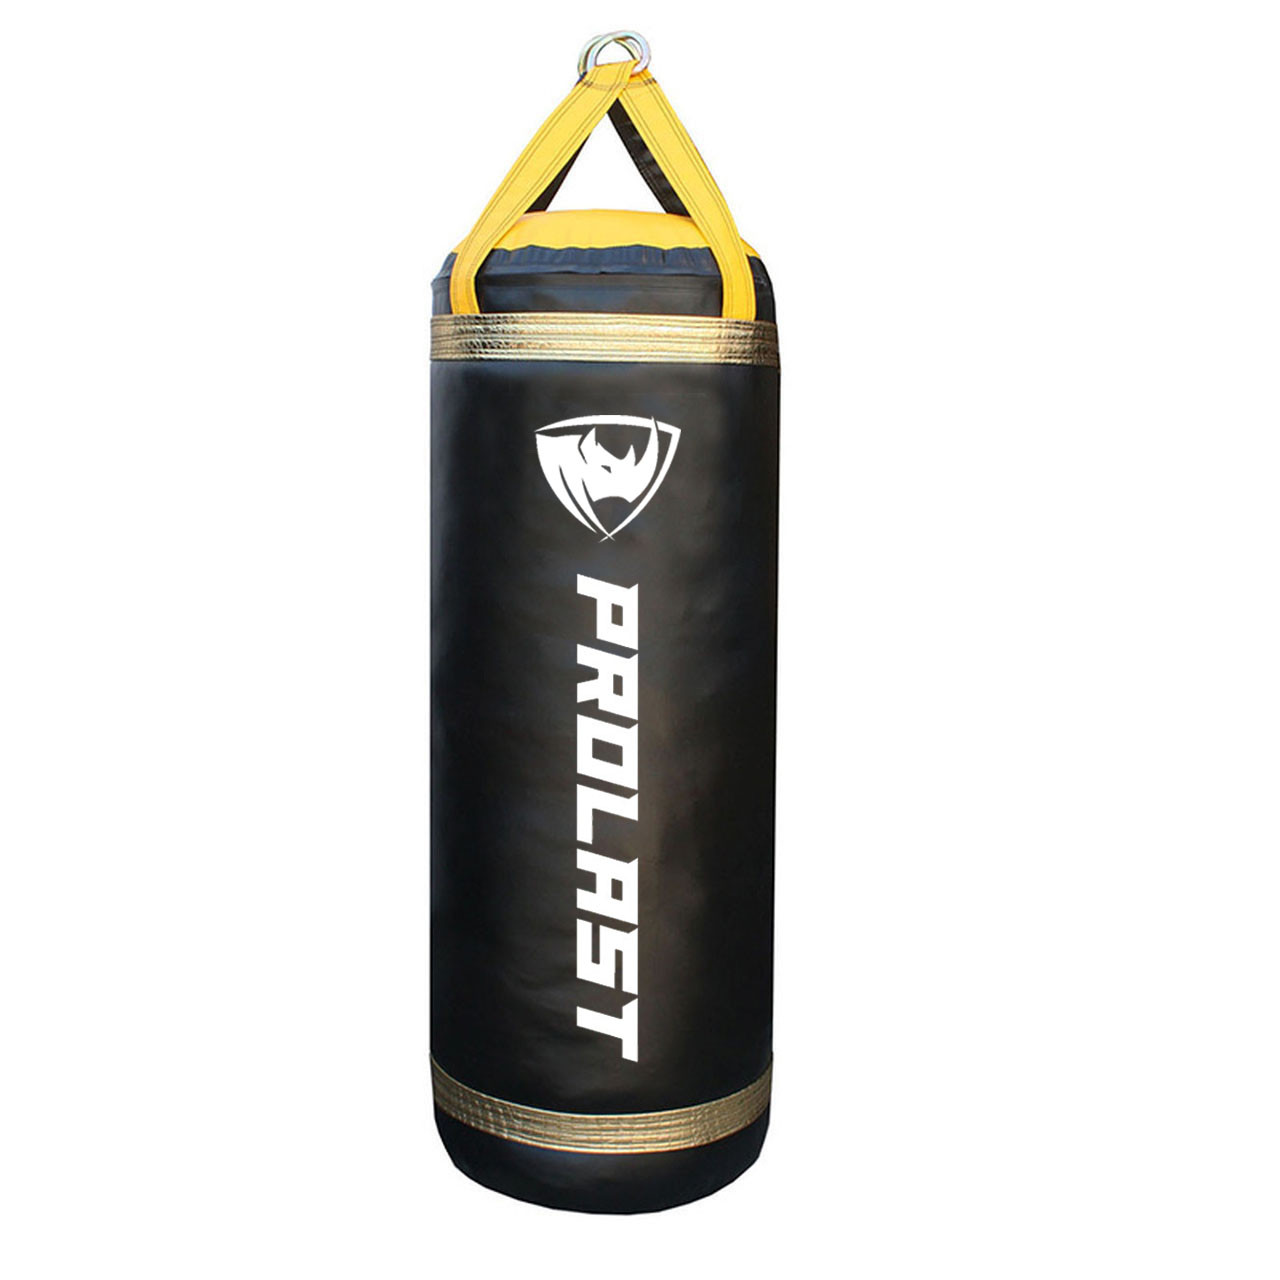 PROLAST Heavy-Duty Professional Boxing Heavy Punching Bag Hanger